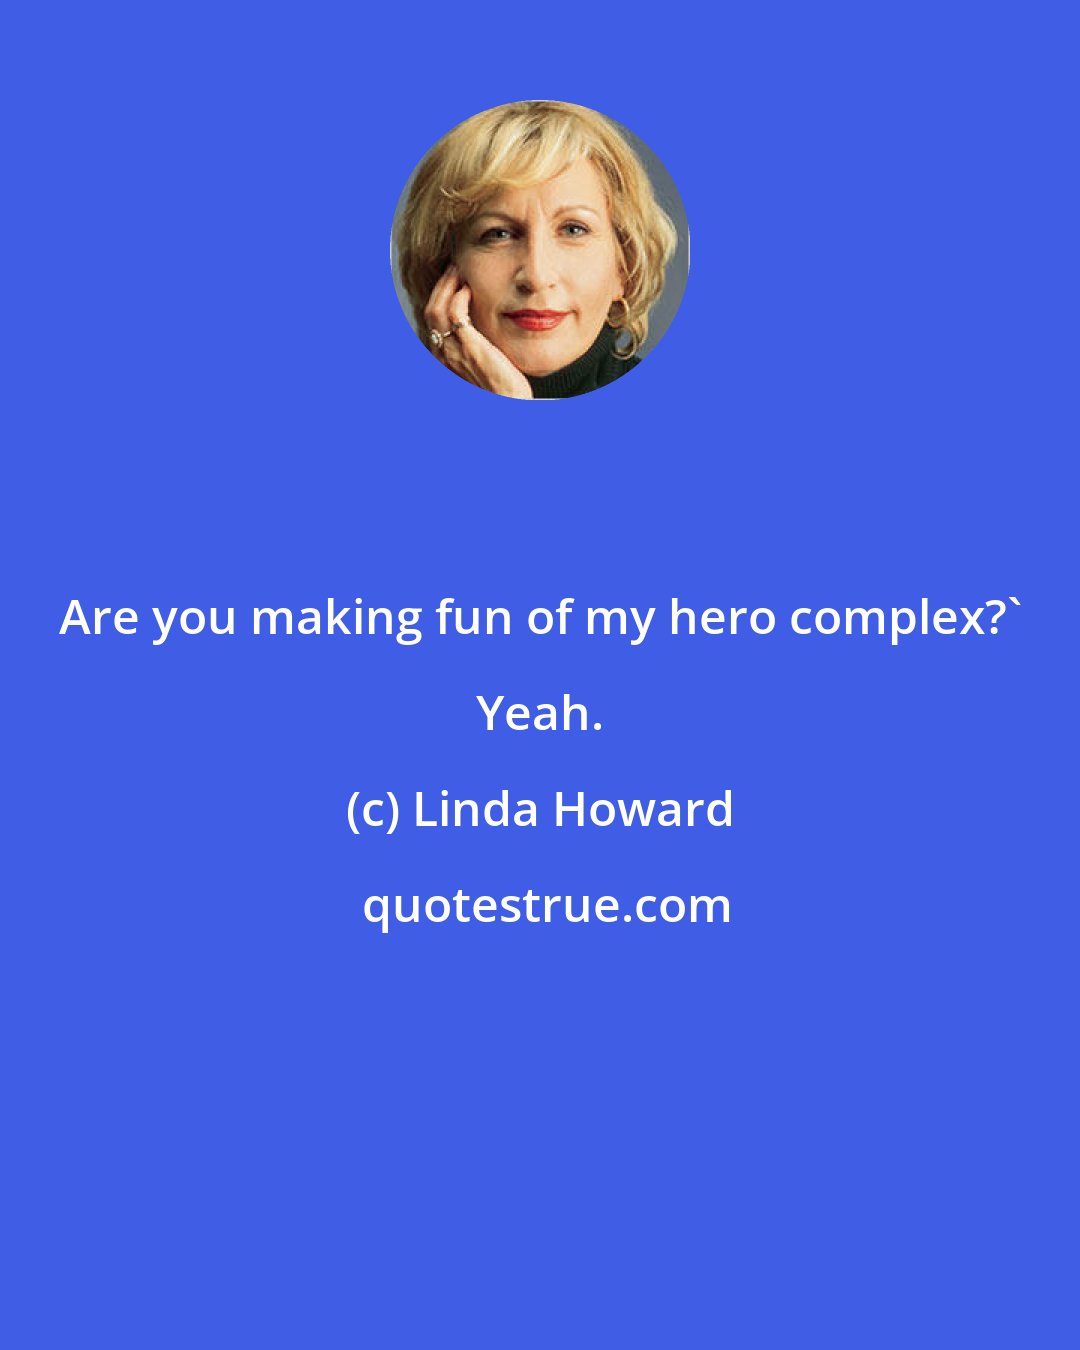 Linda Howard: Are you making fun of my hero complex?' Yeah.